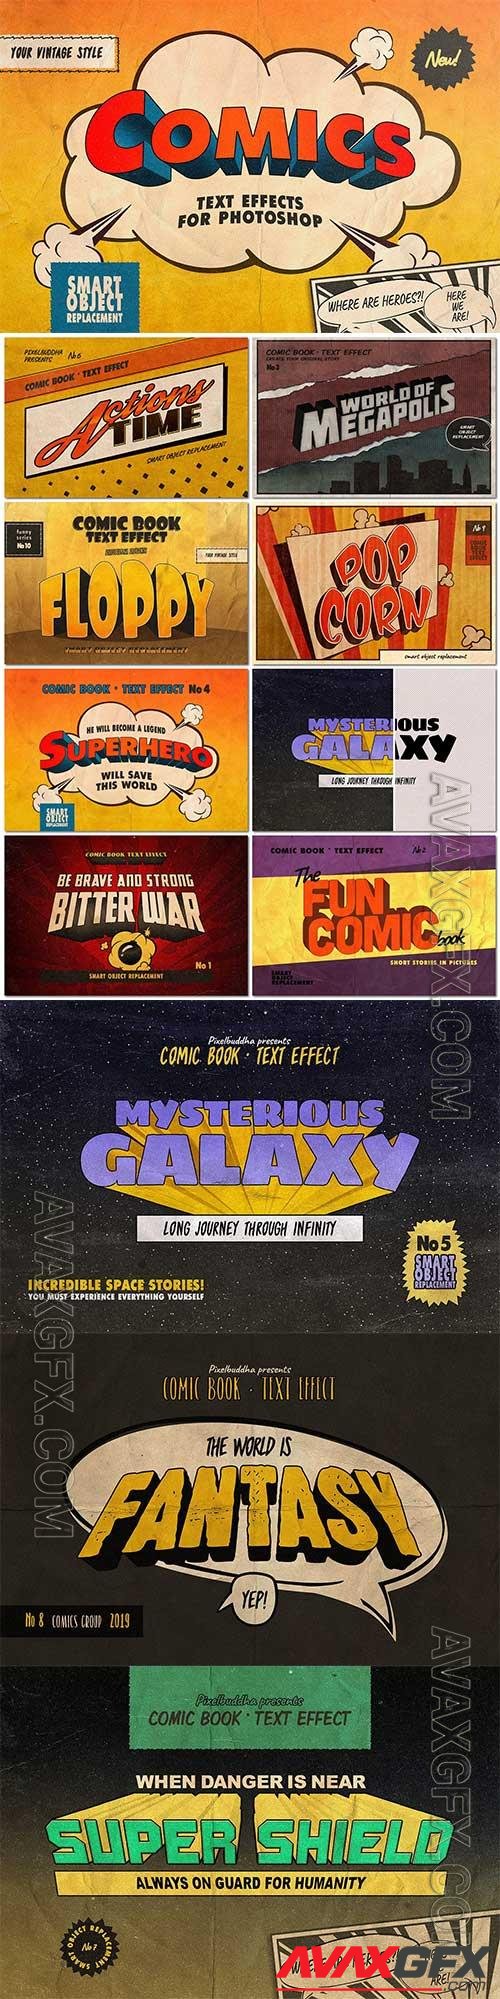 Vintage Comics Text Effects Psd